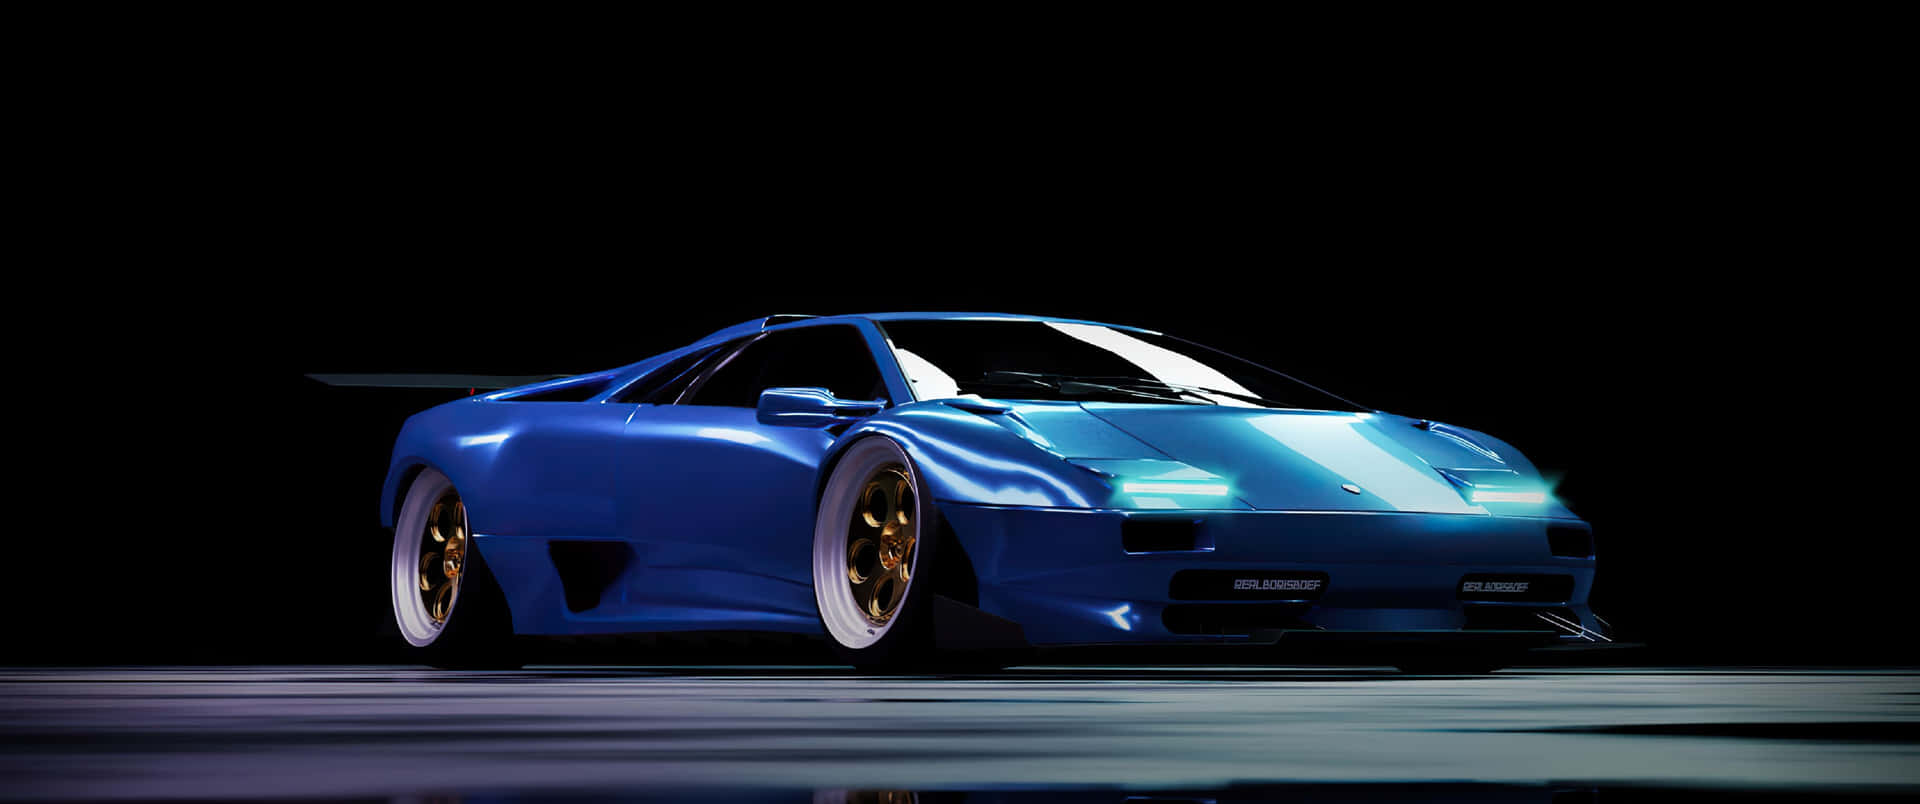 3440x1440 Blue Lamborghini Diablo Car Wallpaper